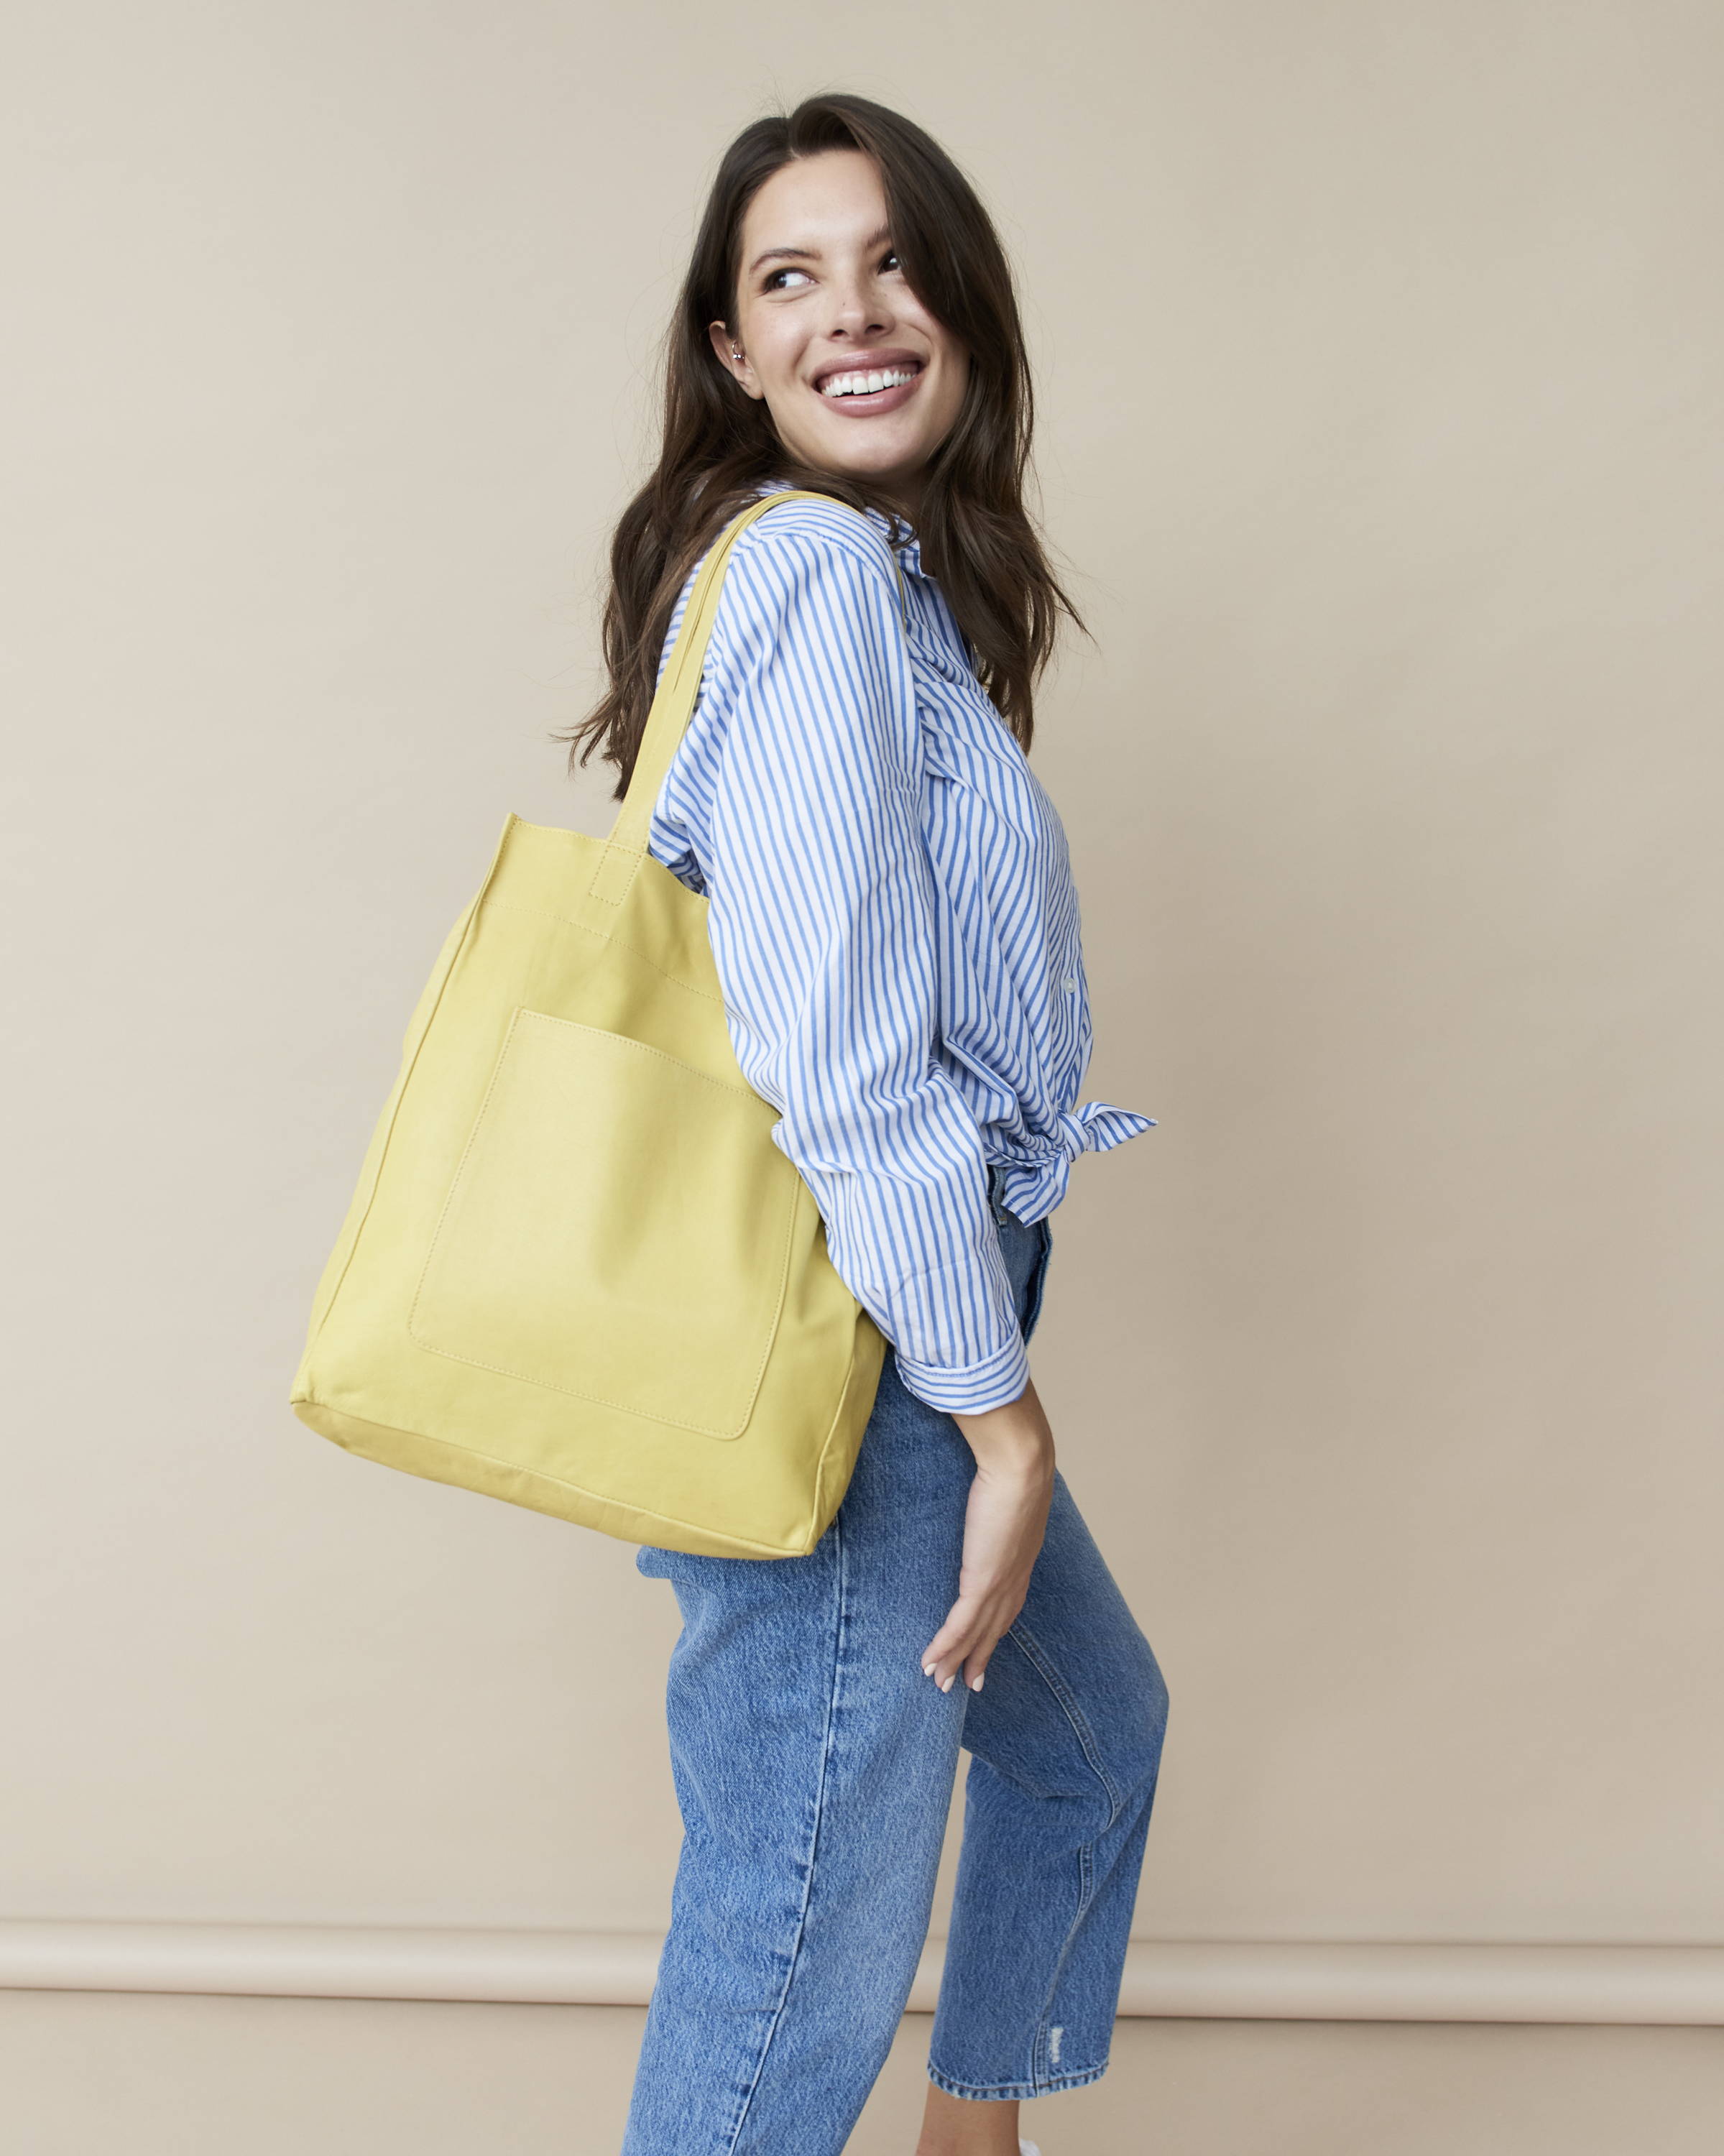 What She Wears: spring handbags